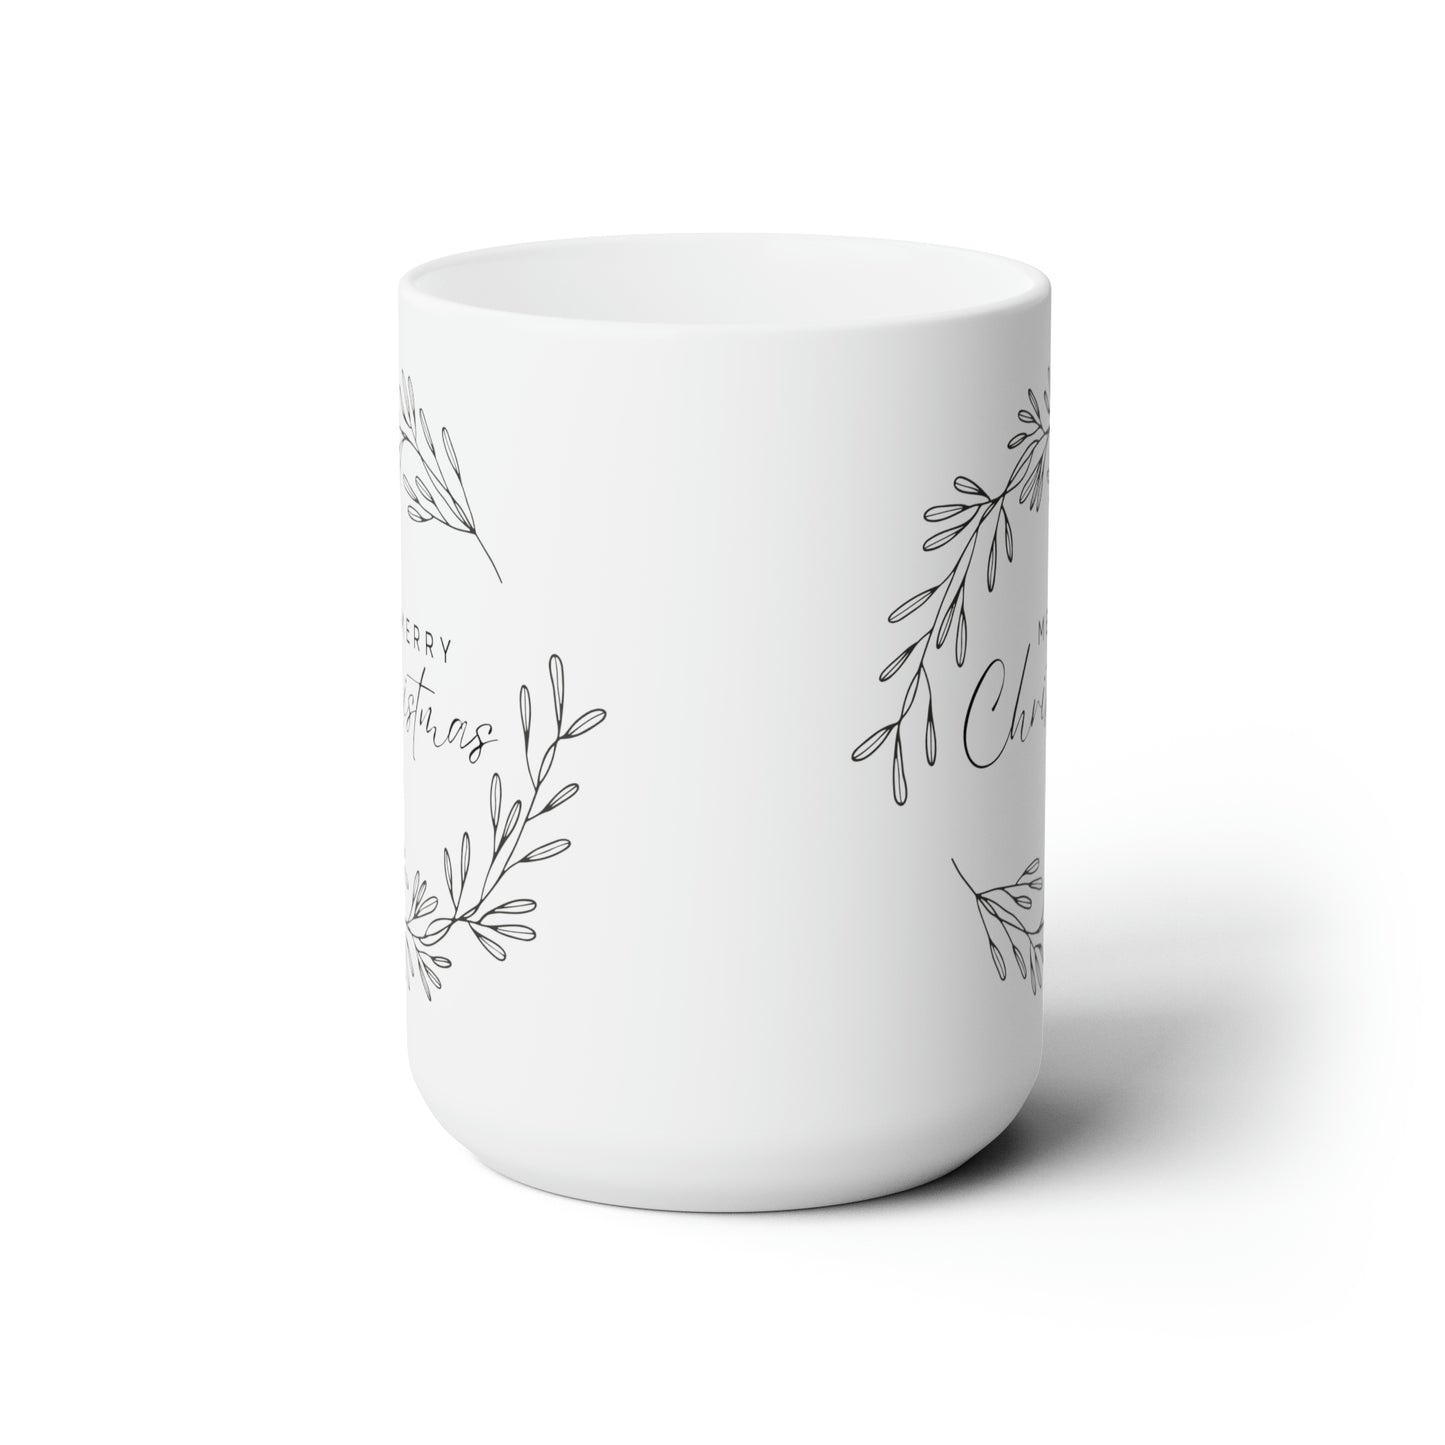 Merry Christmas Printed Ceramic Mug, 15oz, White